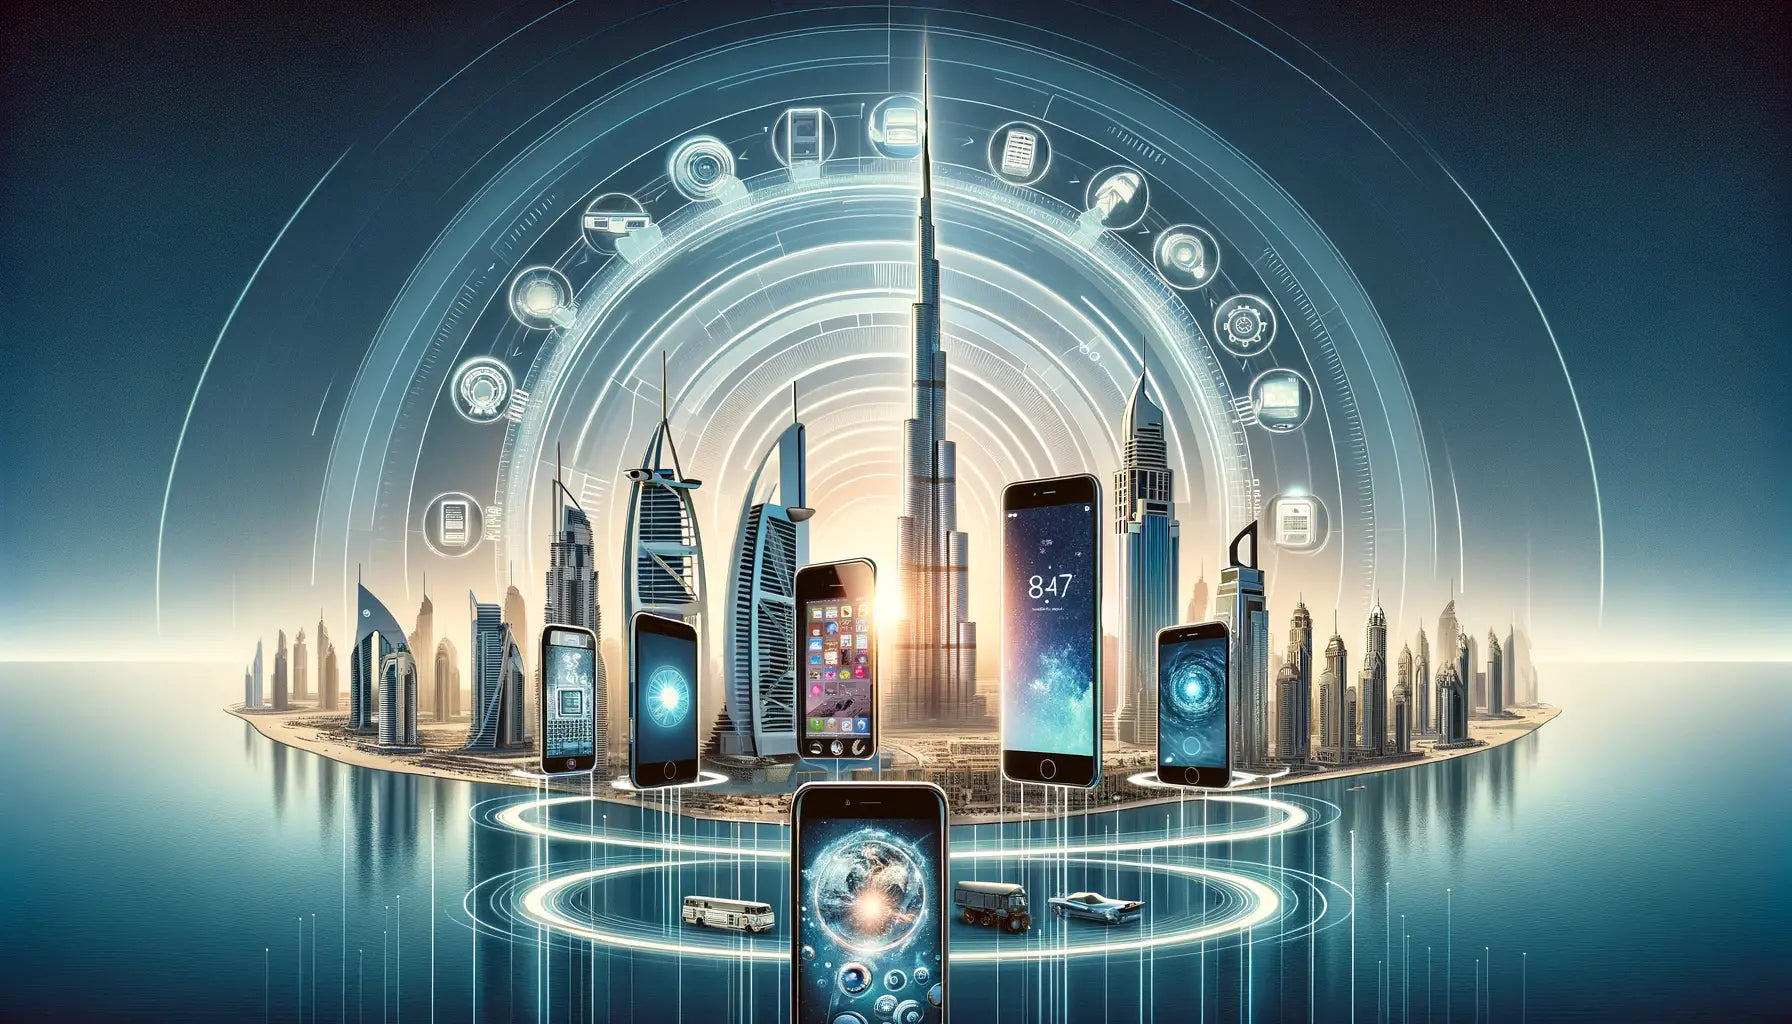 UAE's Smartphone Evolution Innovations and Impact